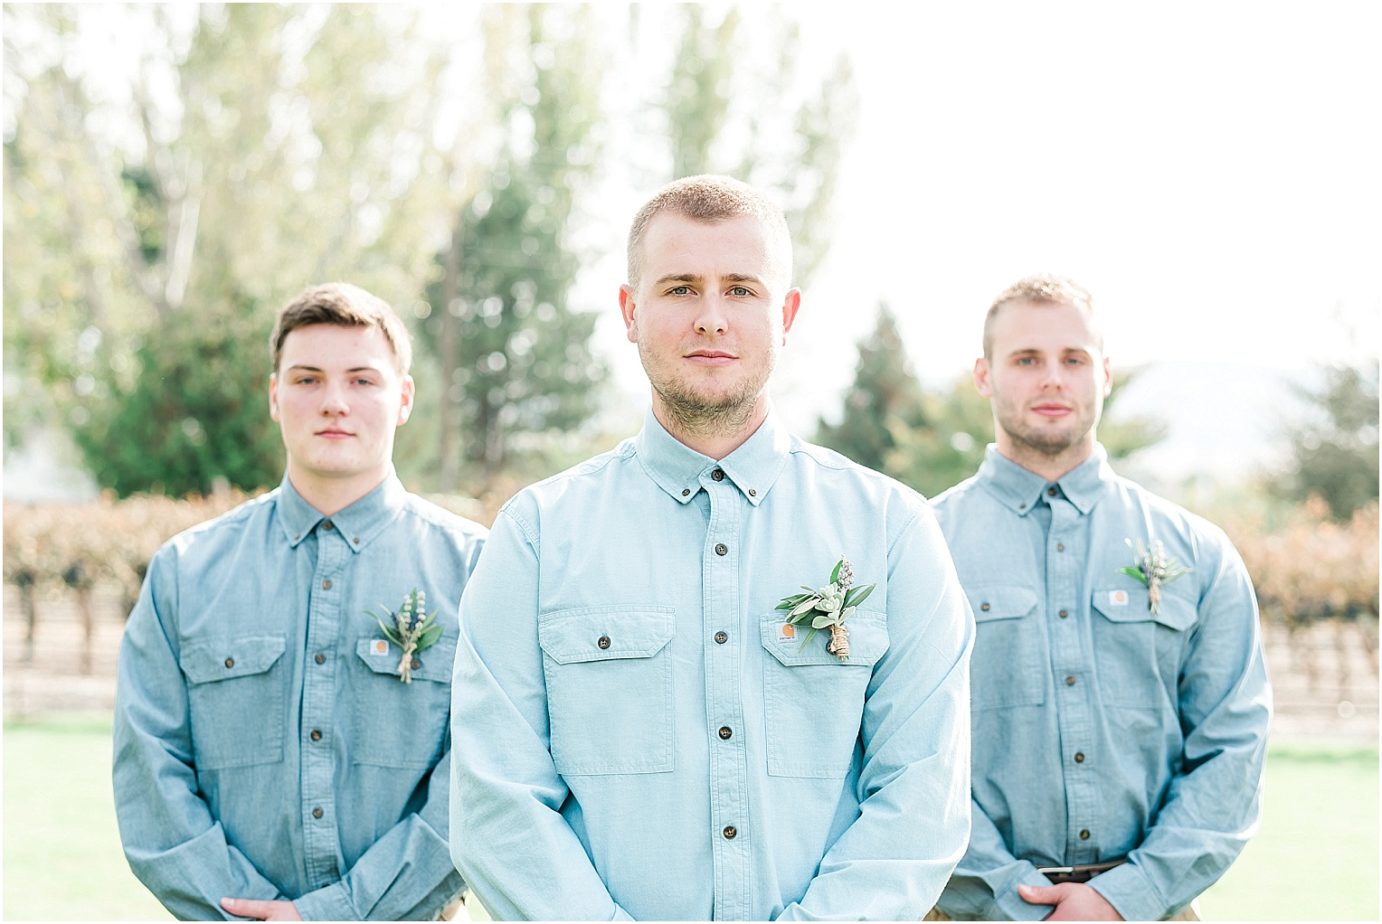 Sugar pine barn wedding tucannon cellars Brandon and Chloe groomsmen in dusty blue shirts